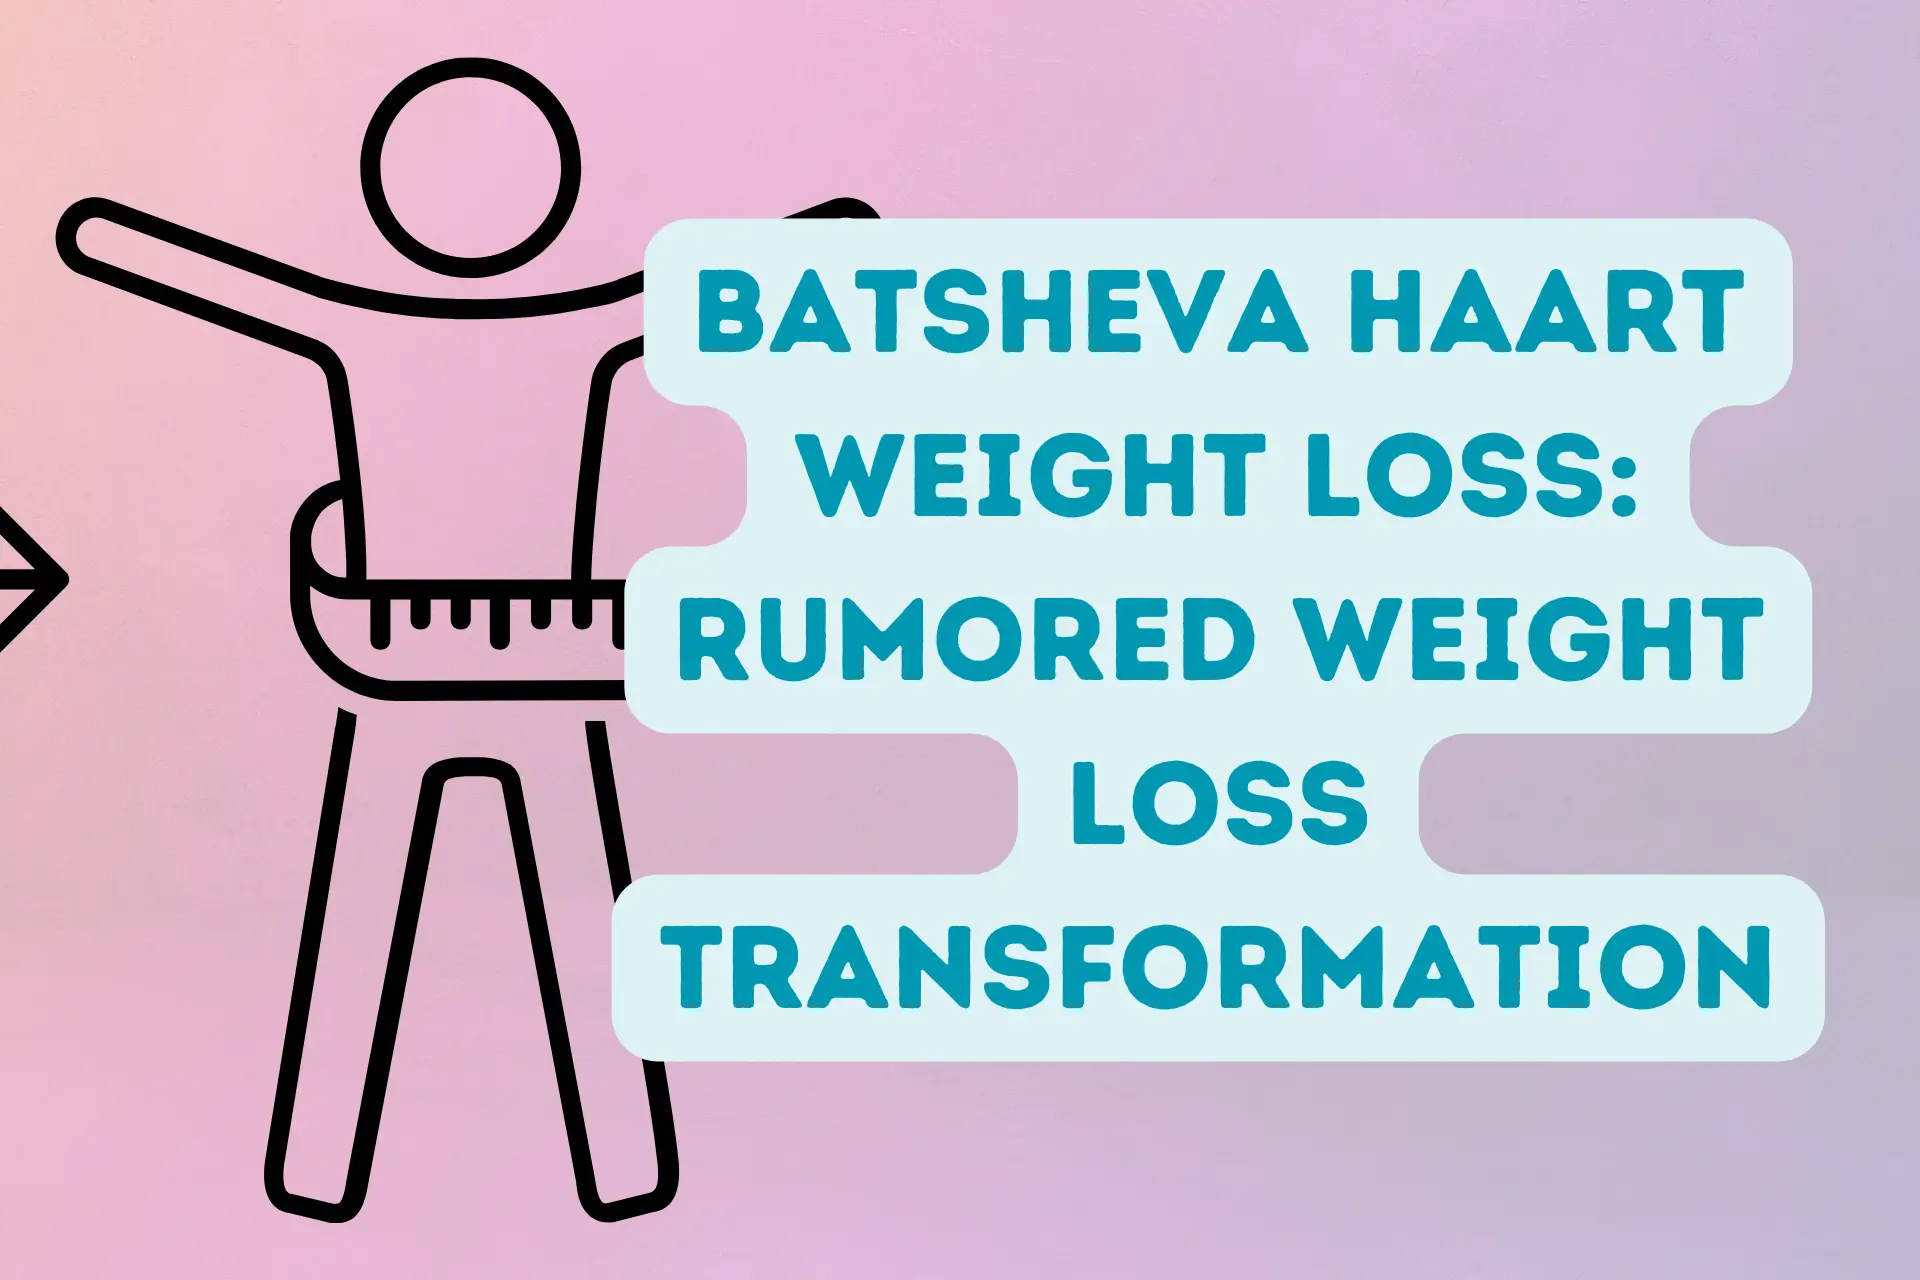 Batsheva Haart Weight Loss Rumored Weight Loss Transformation